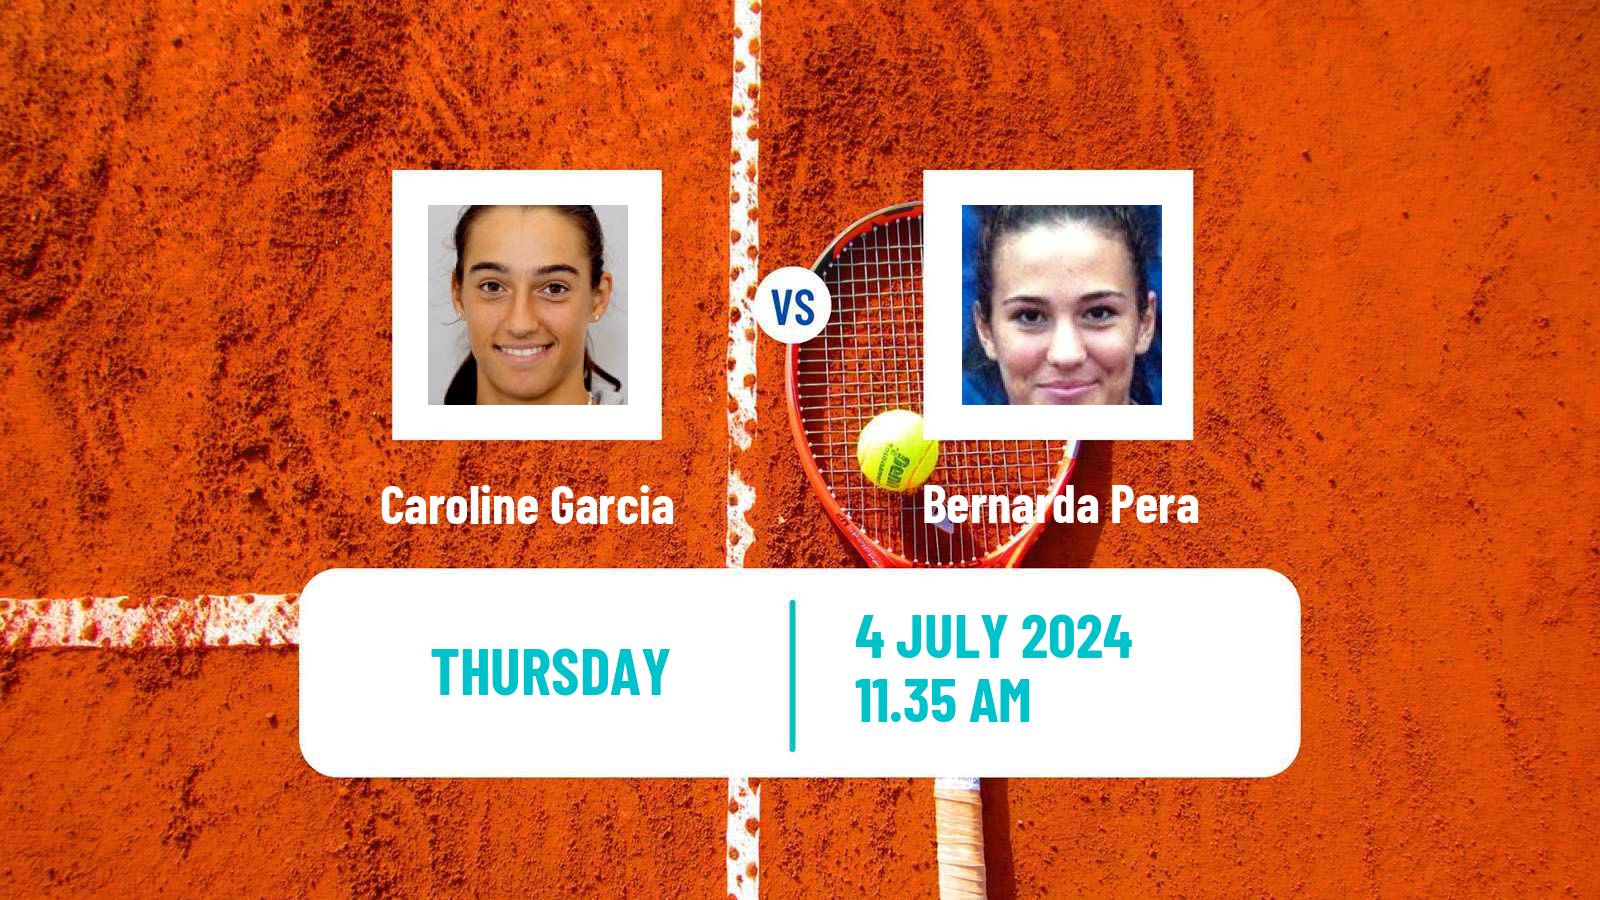 Tennis WTA Wimbledon Caroline Garcia - Bernarda Pera